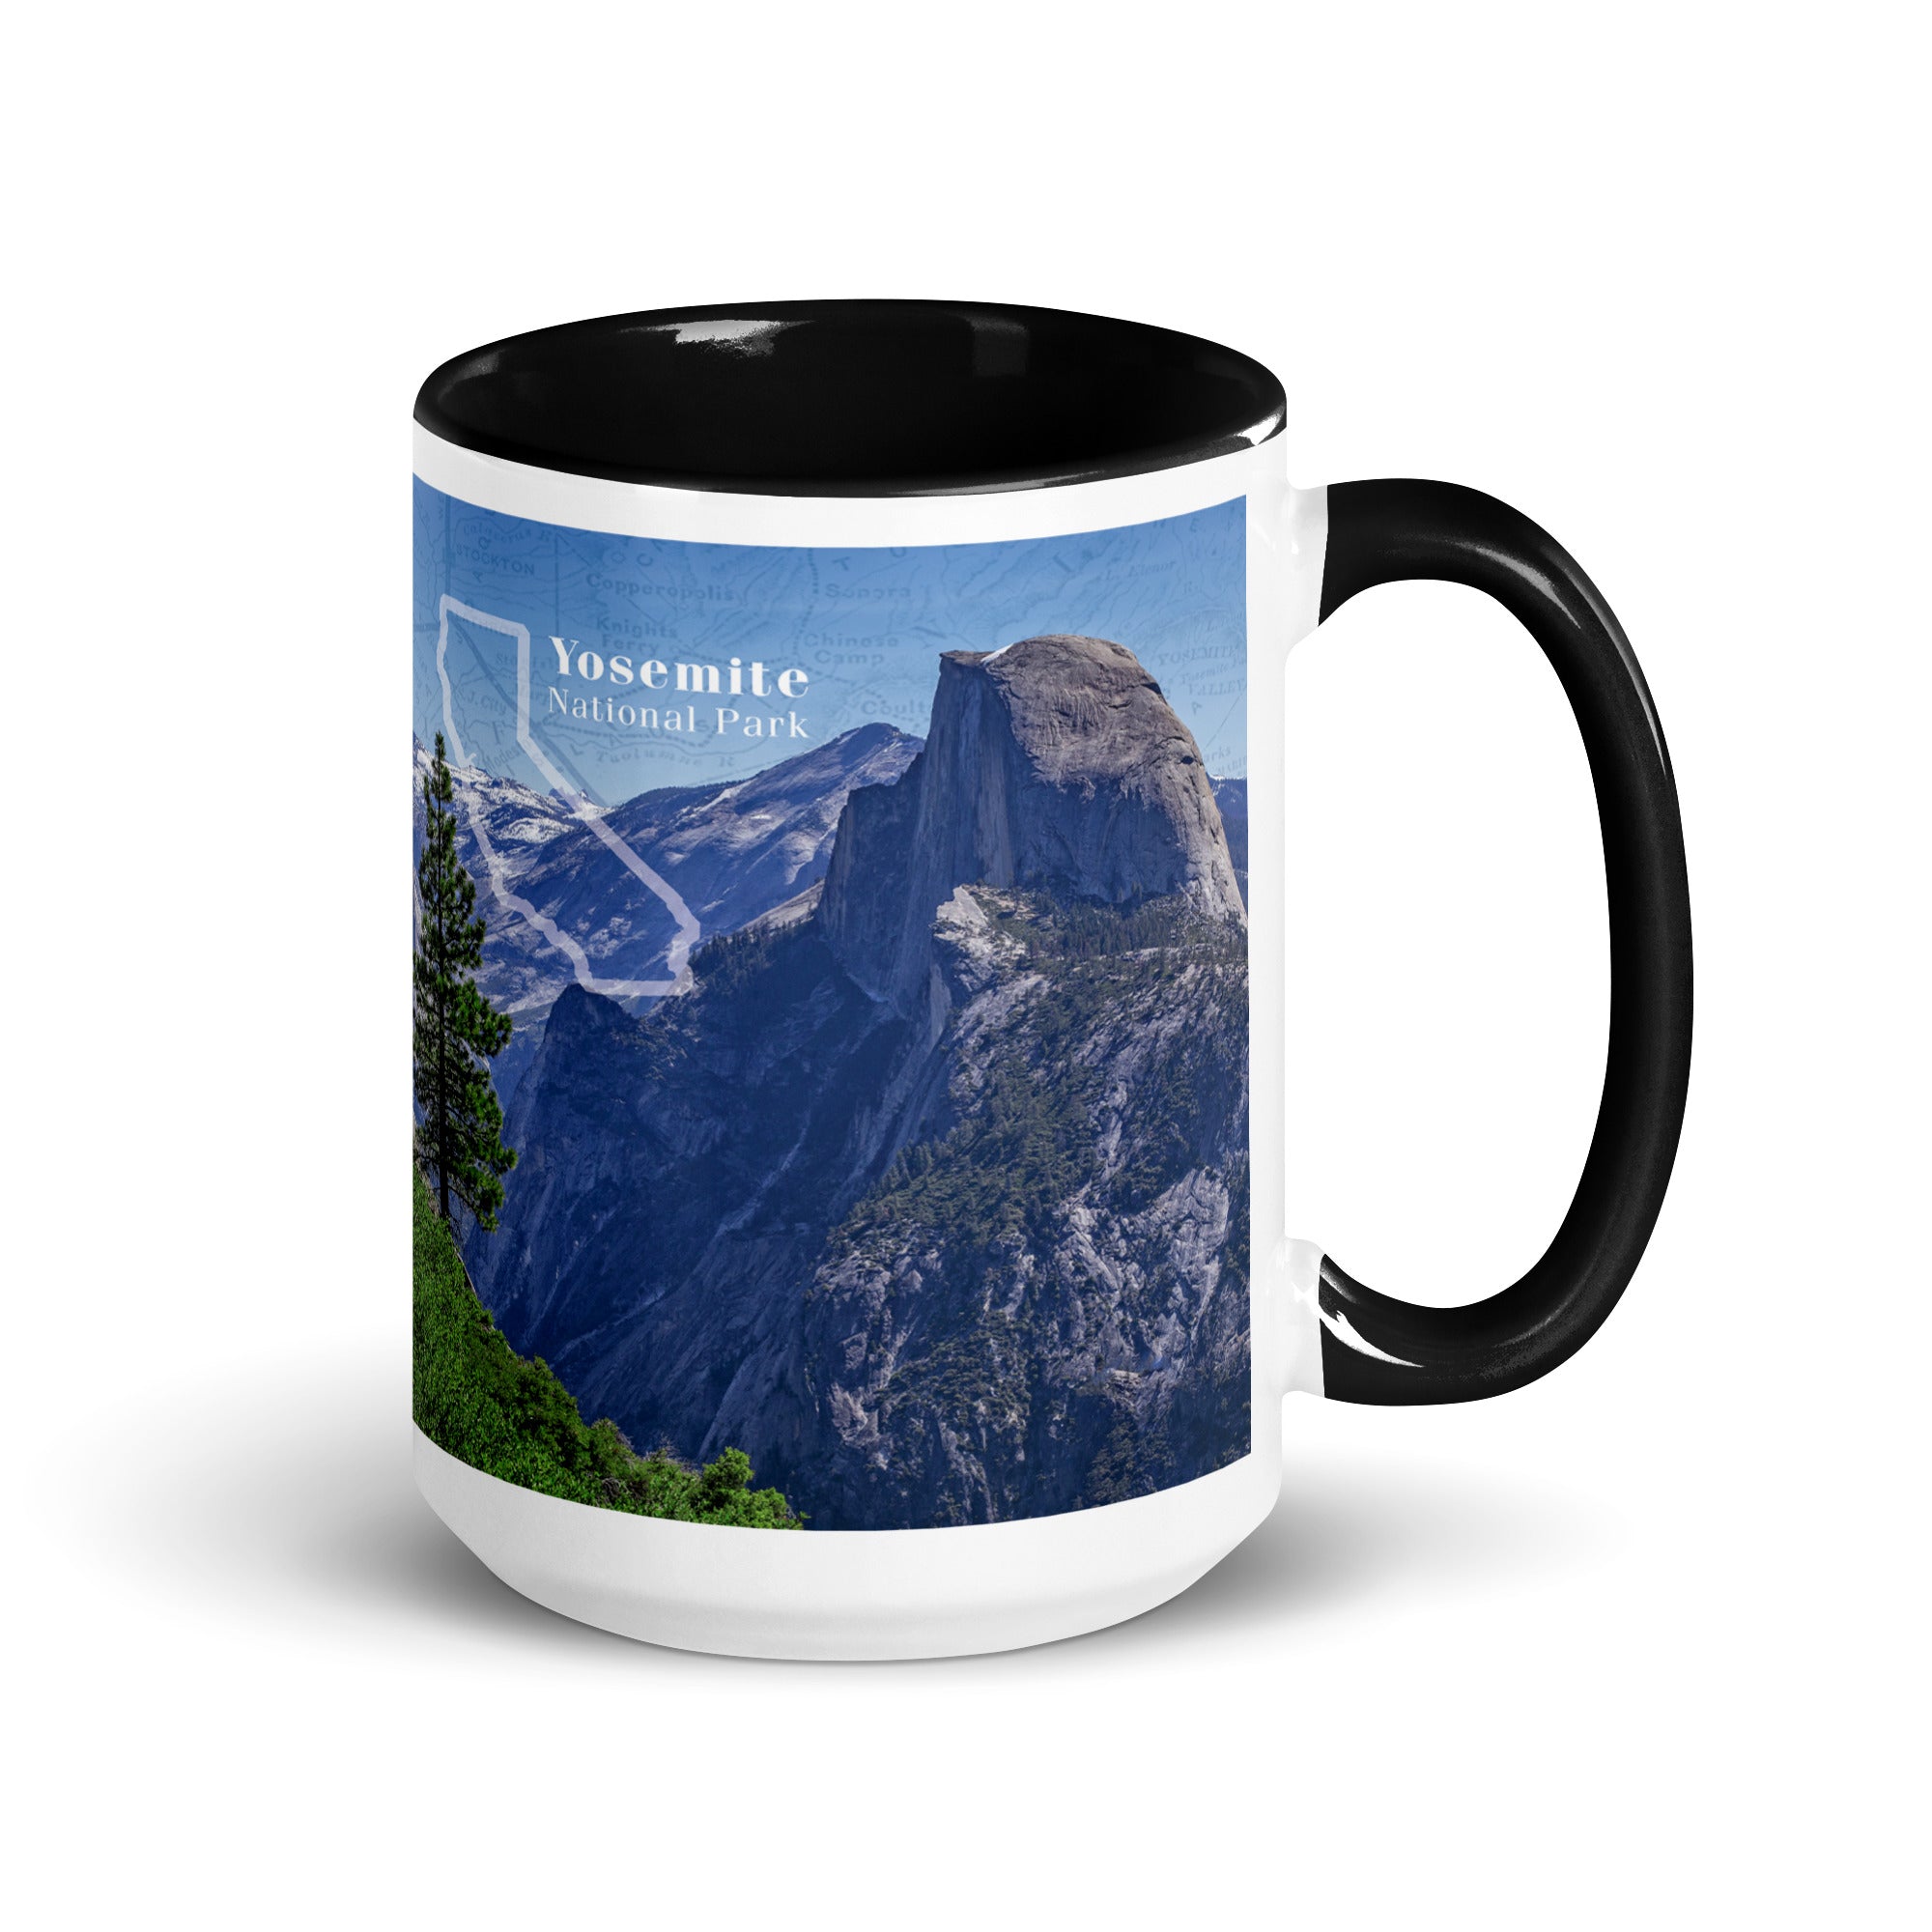 Yosemite National Park Mug with Black Inside